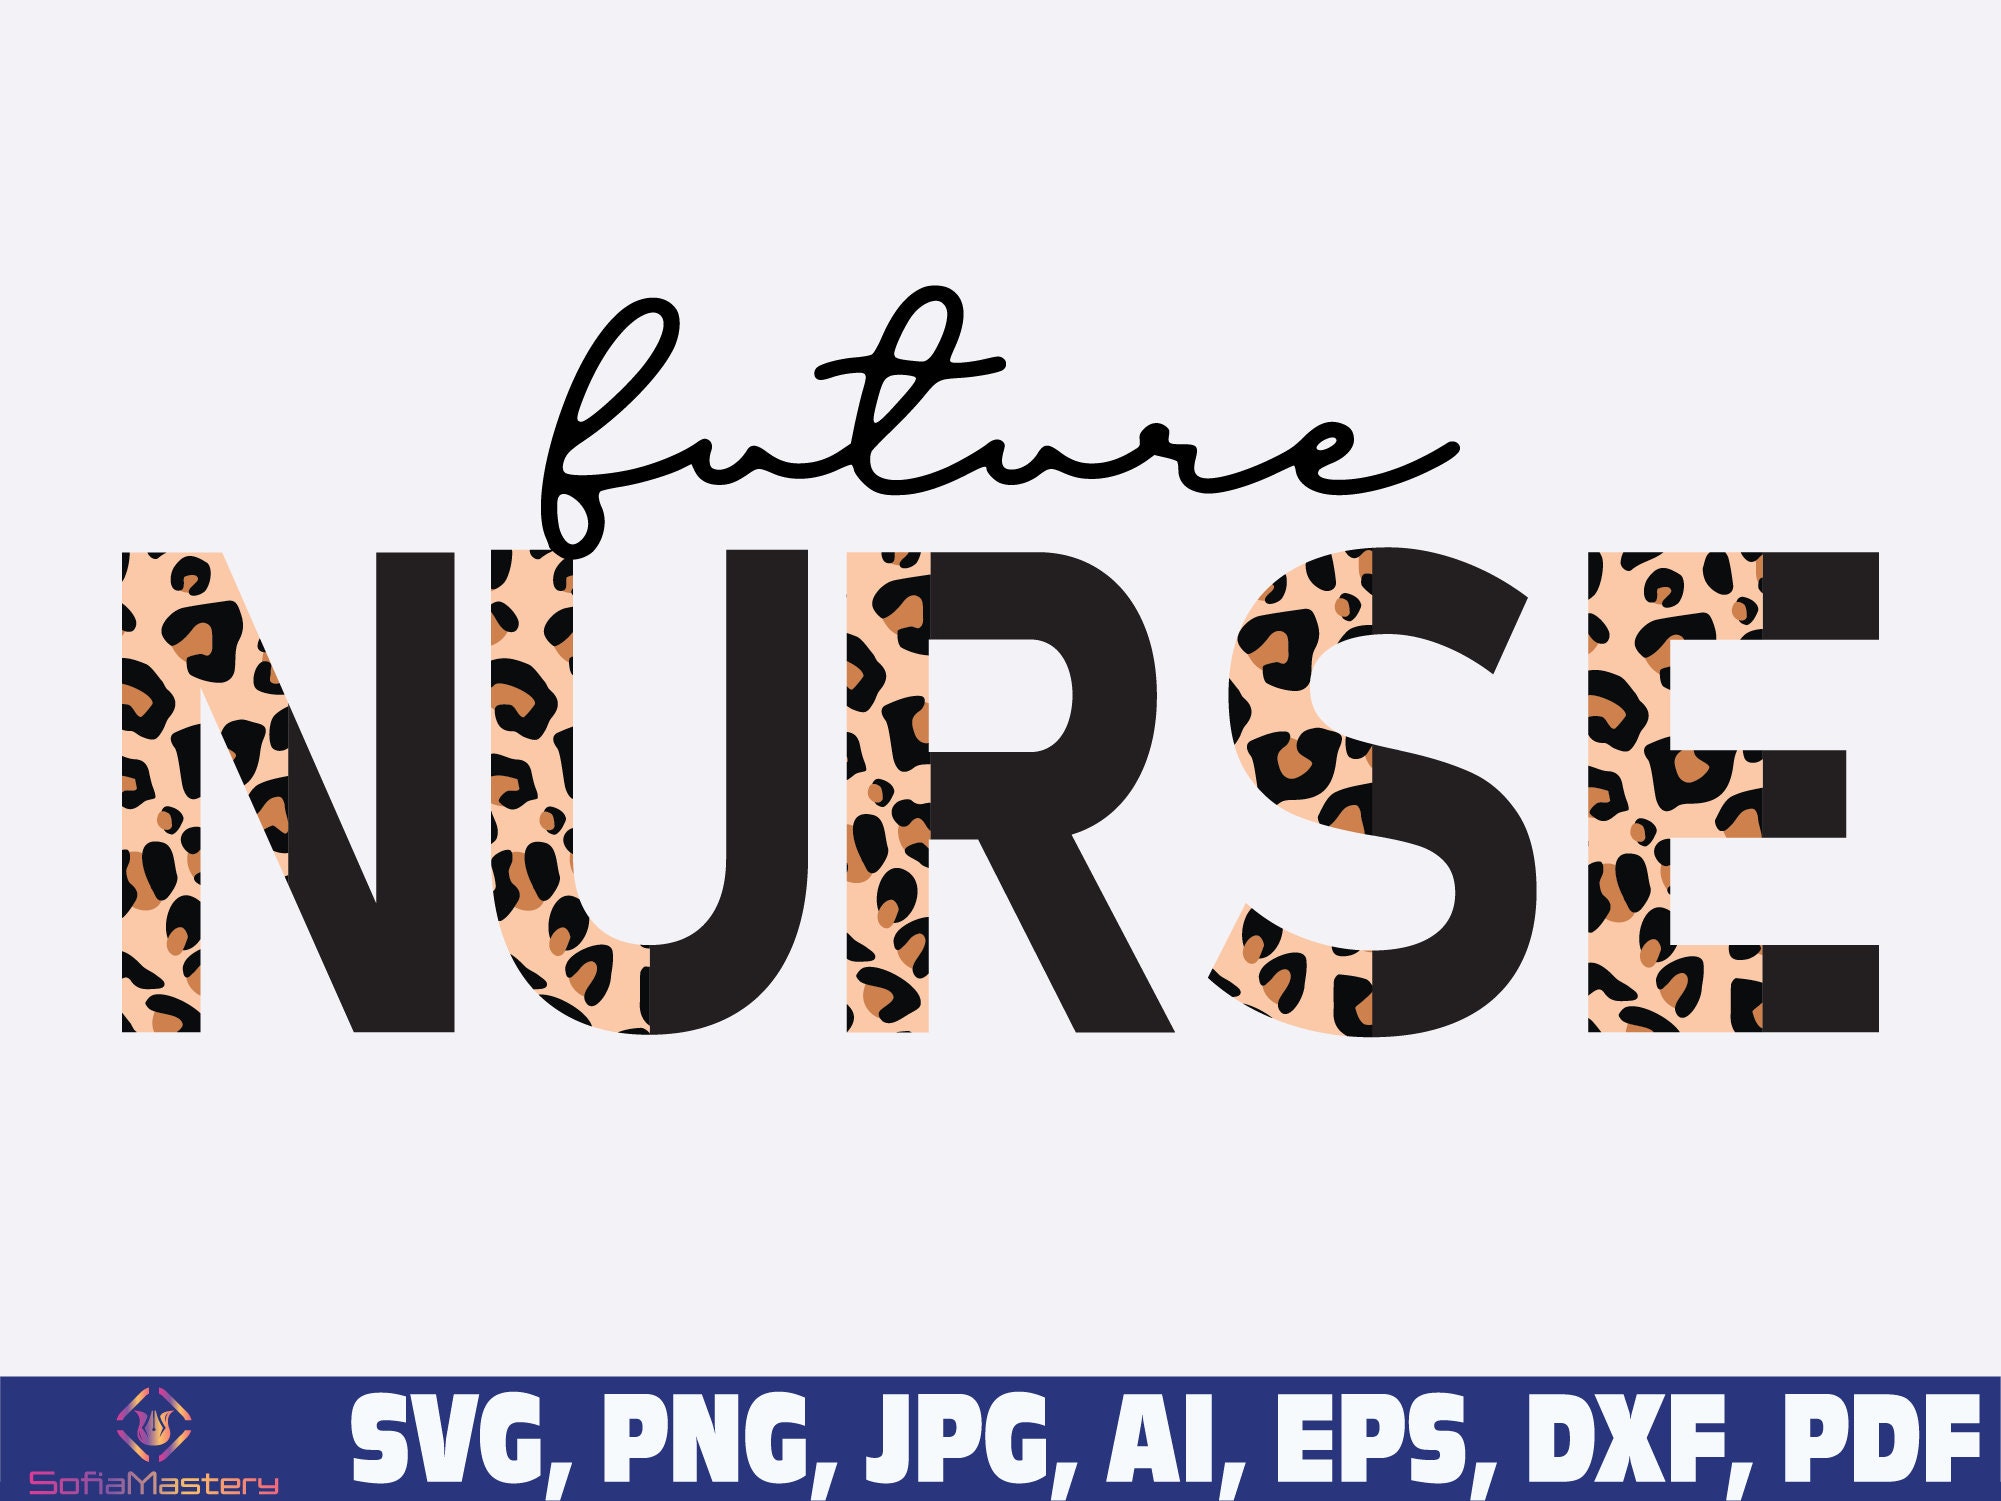 Future Nurse – Hey, Let's Make Stuff